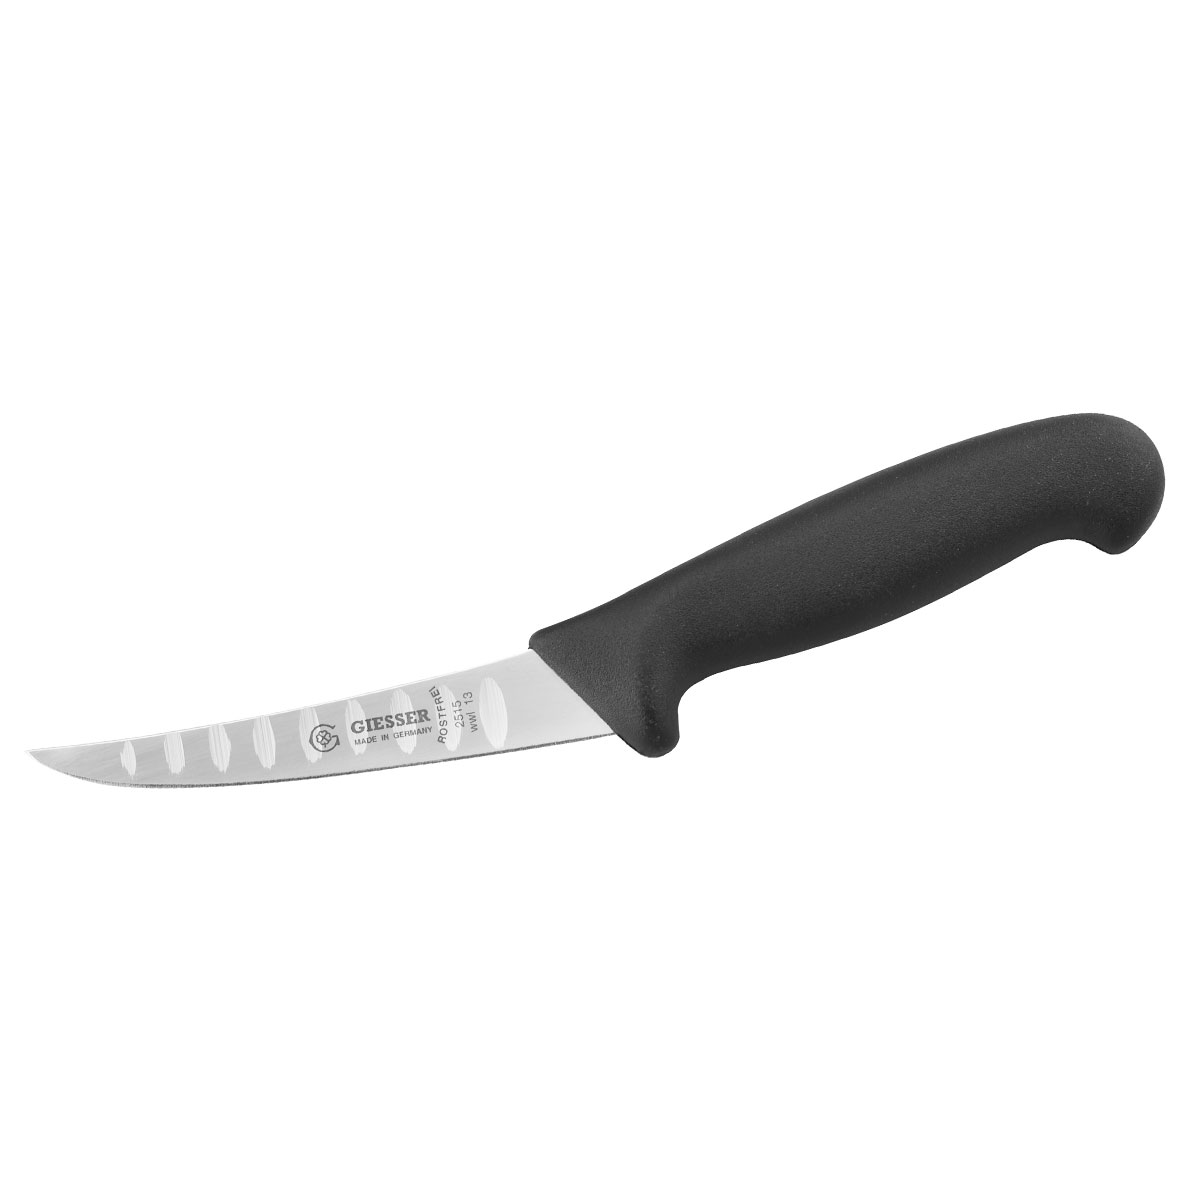 Giesser Boning Knife, 13cm (5) - Curved, Narrow, Stiff, Fluted Blade - Black